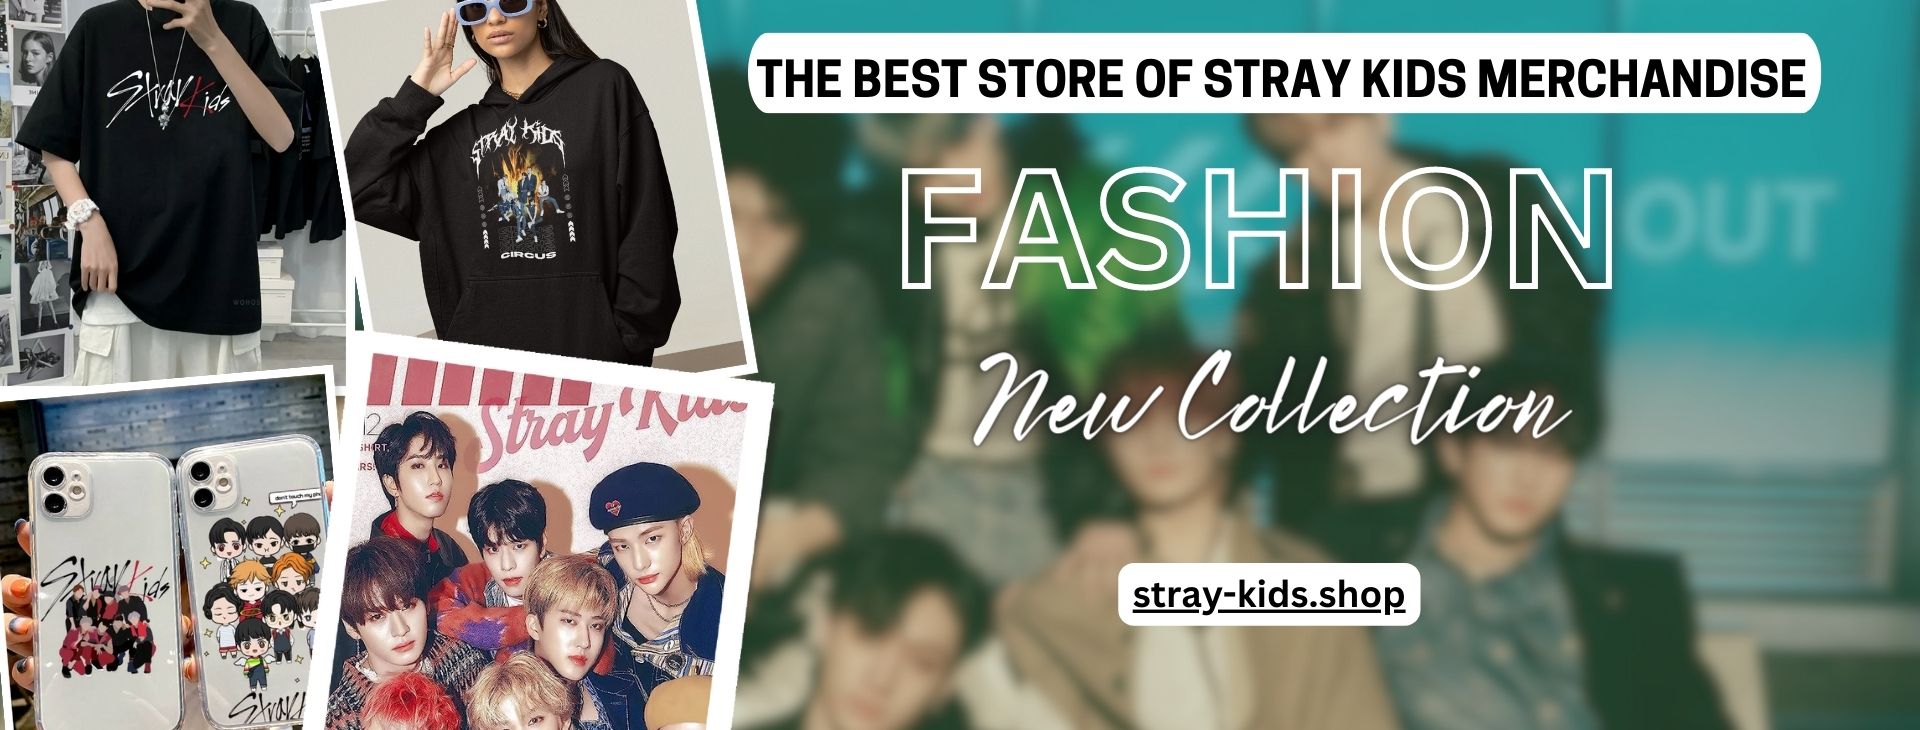 no edit - Stray Kids Shop